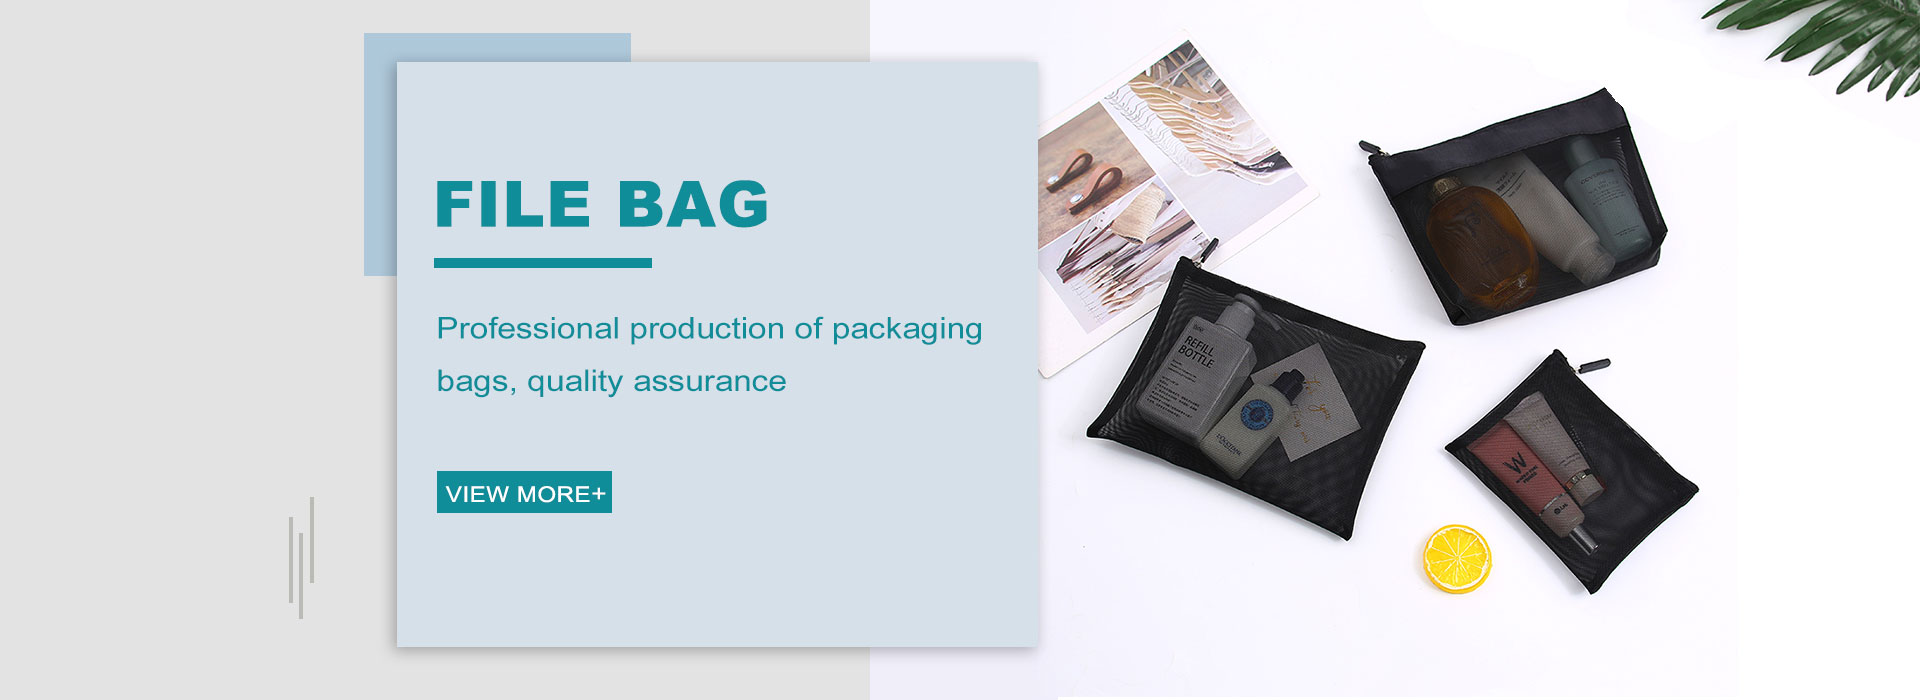 China File Bag Manufacturers